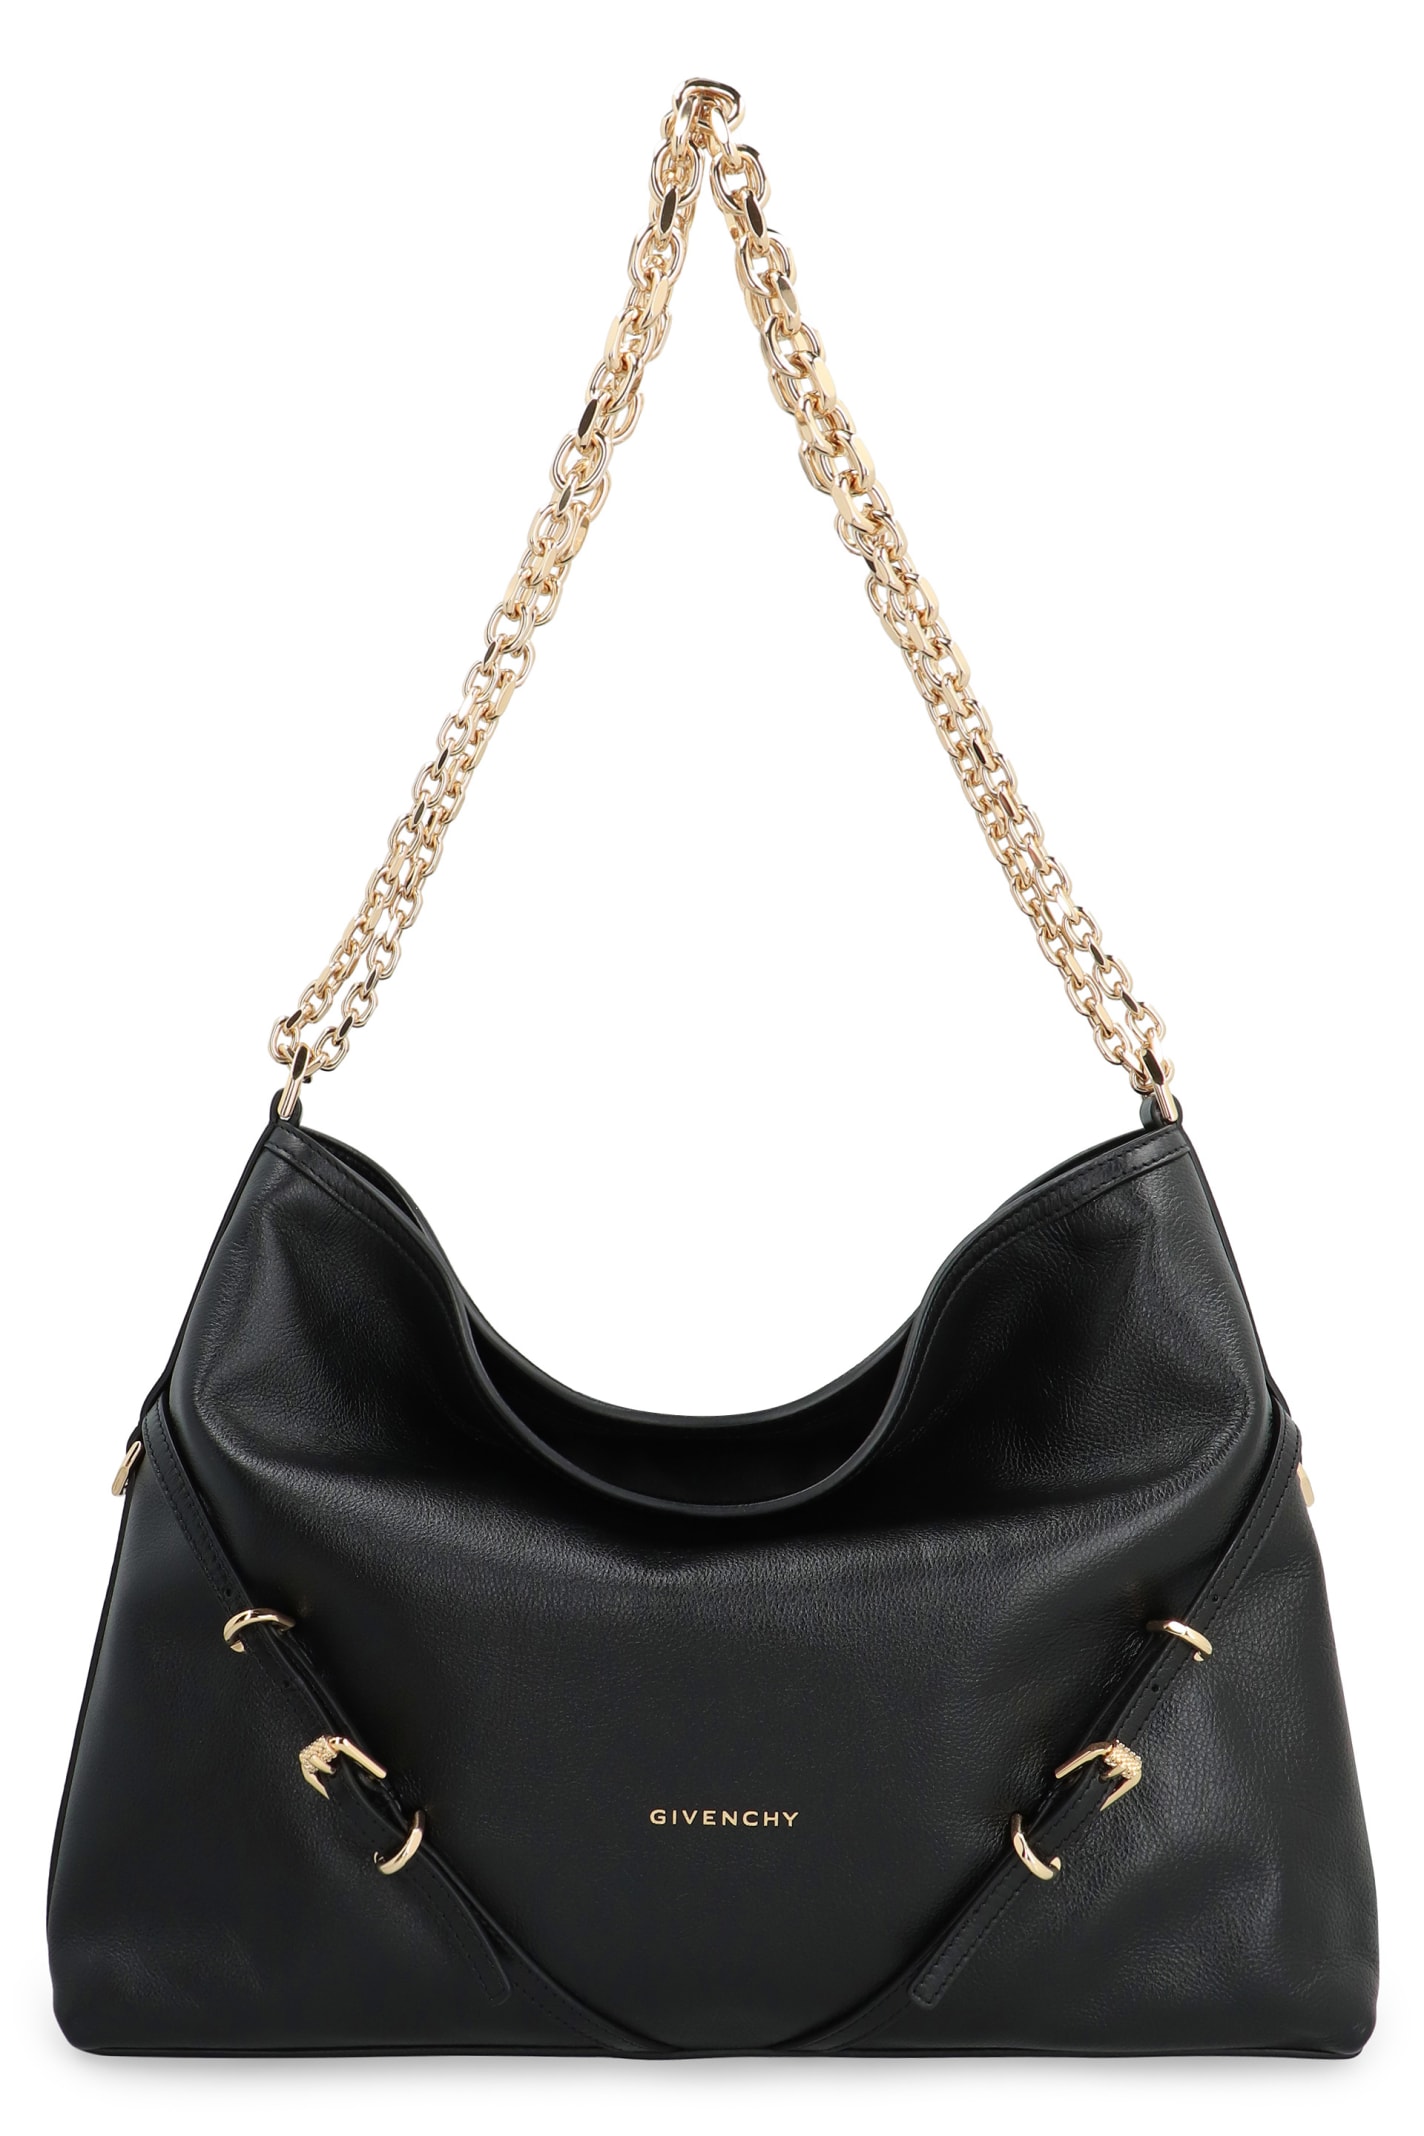 Givenchy Voyou Chain Leather Shoulder Bag In Black